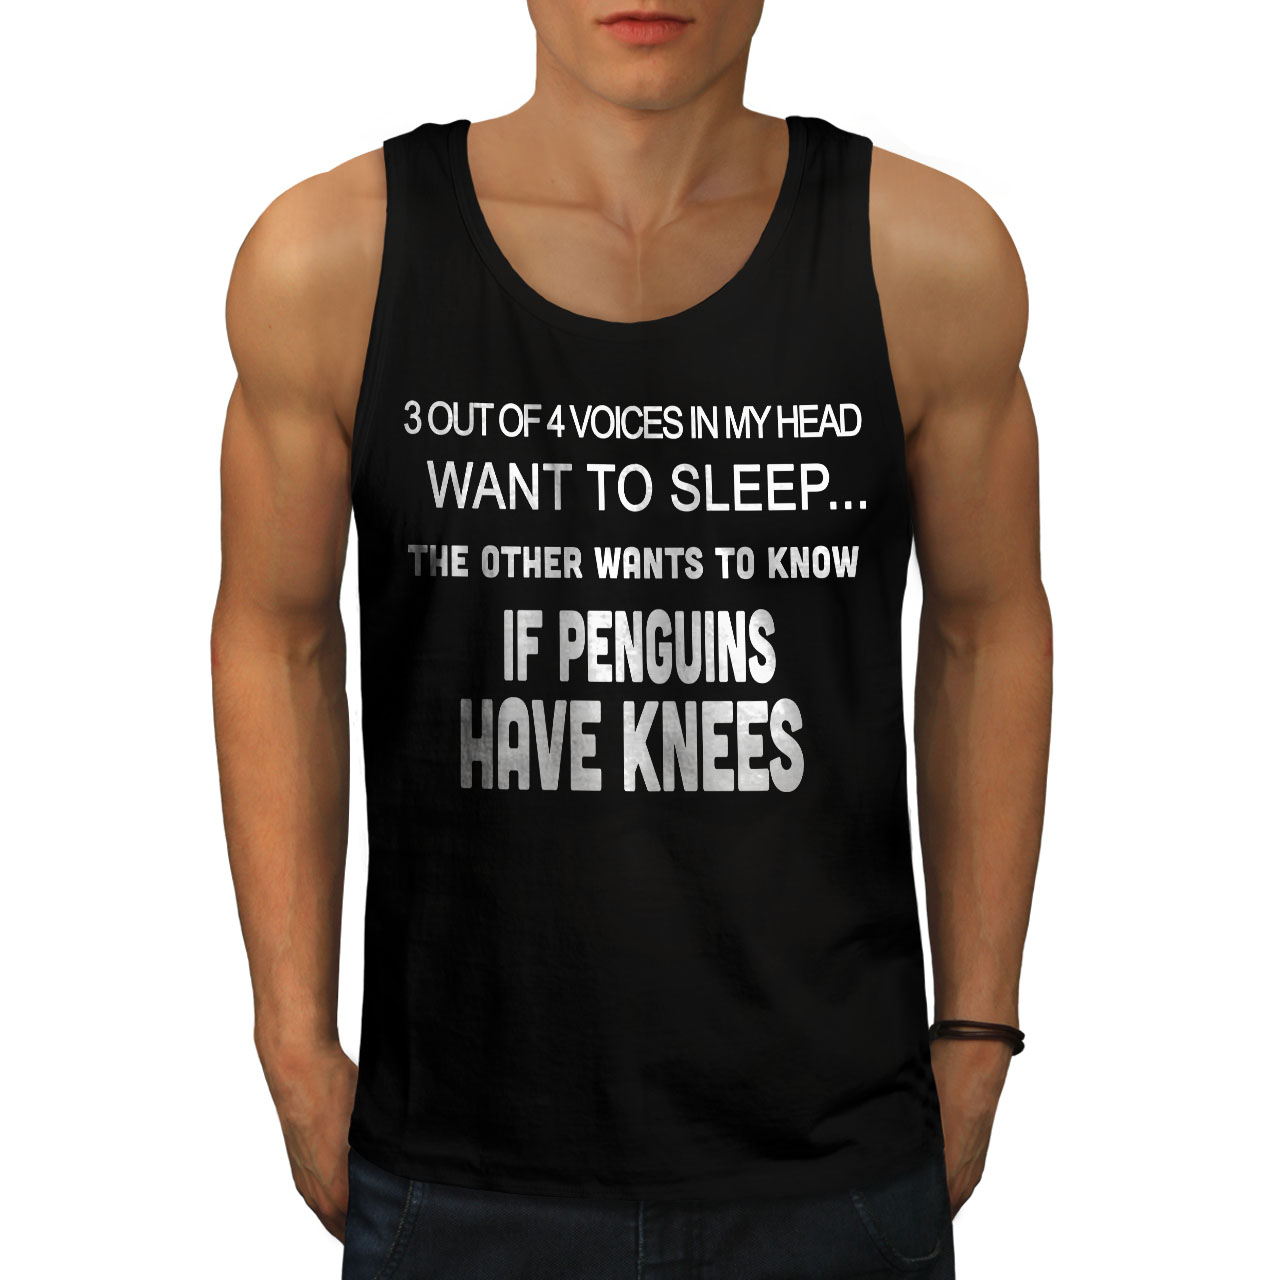 Kleding Gender-neutrale kleding volwassenen Tops & T-shirts Tanktops Frederick Douglass Inspirational Quote Men's Tank Top 